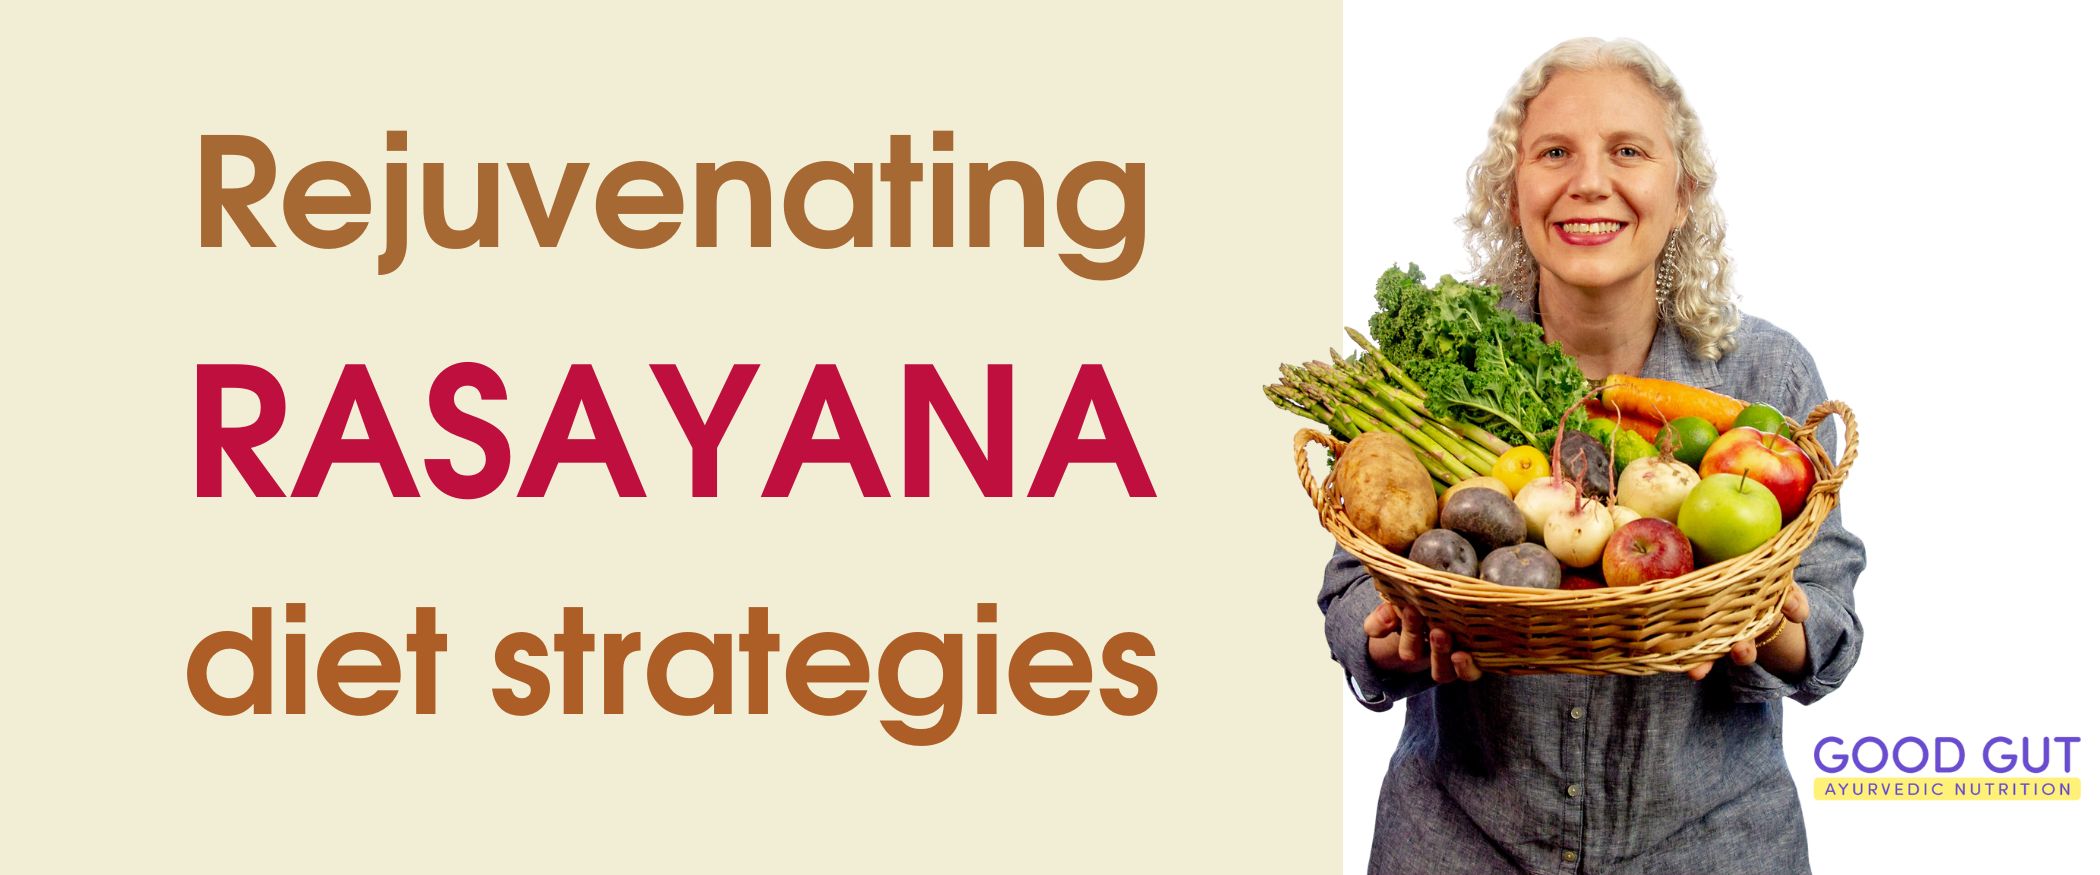 rejuvenating rasayana strategies